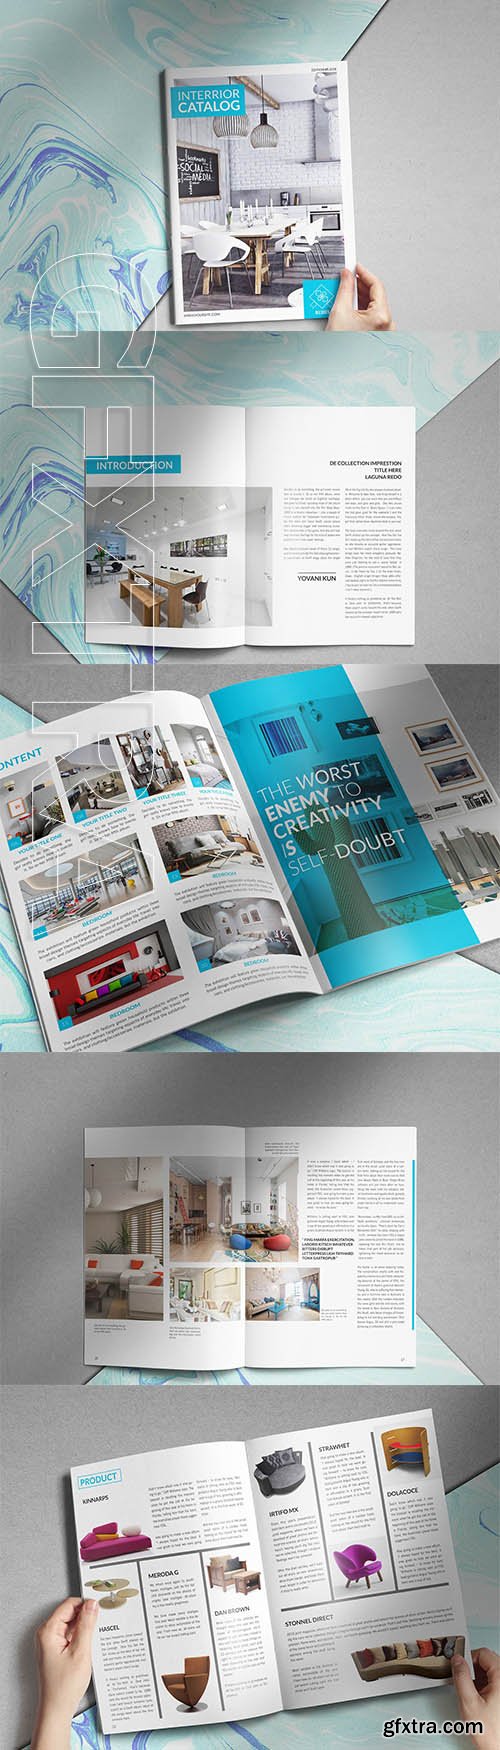 CreativeMarket - Product Interior Catalogs 3487767